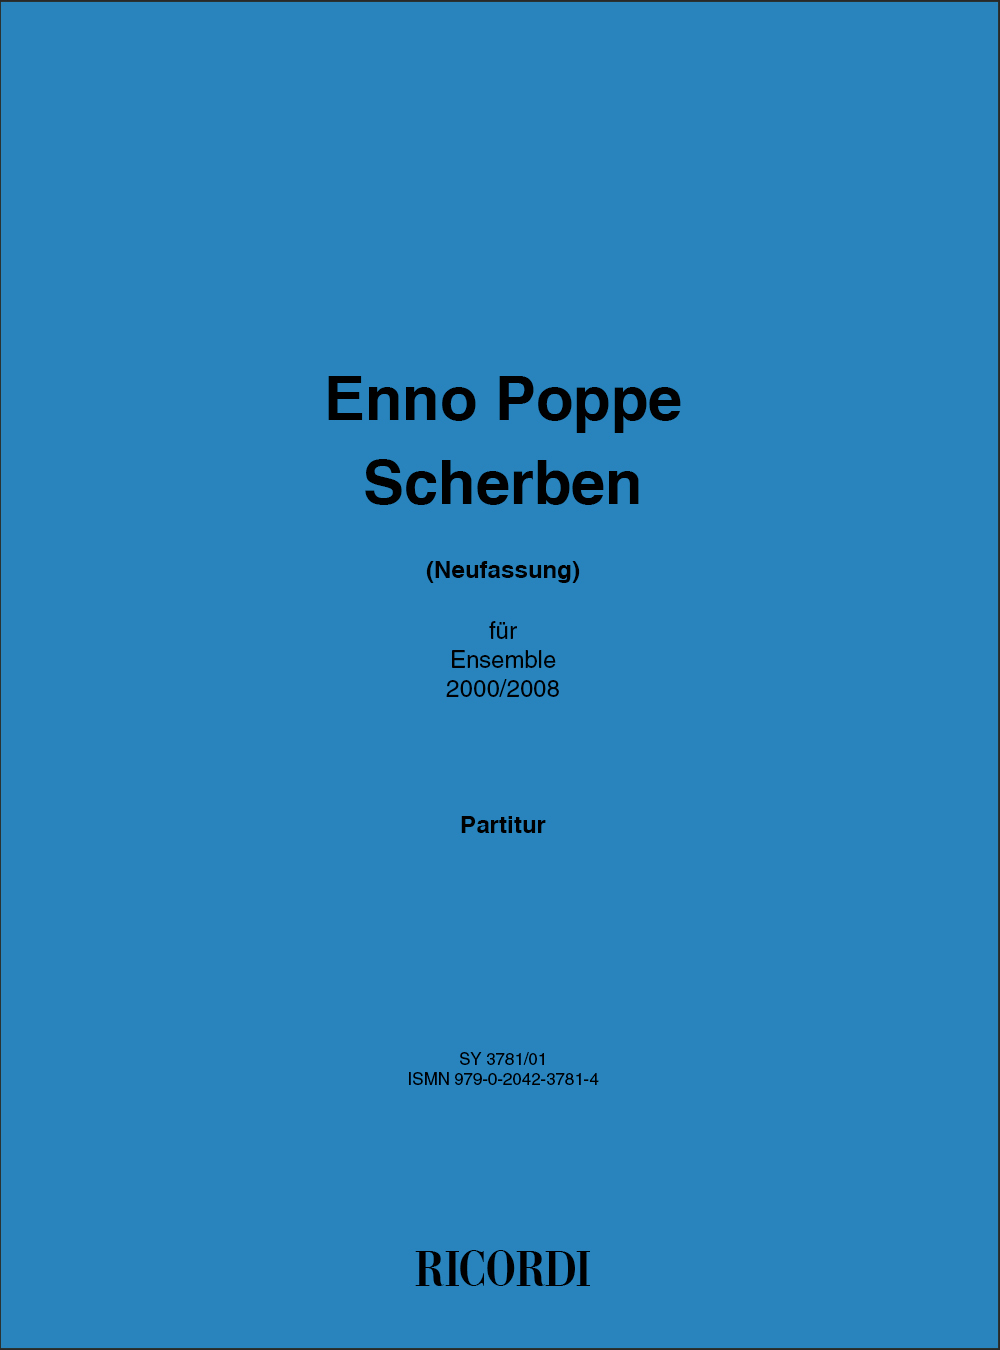 Enno Poppe: Scherben (Zricher Version): Chamber Ensemble: Score